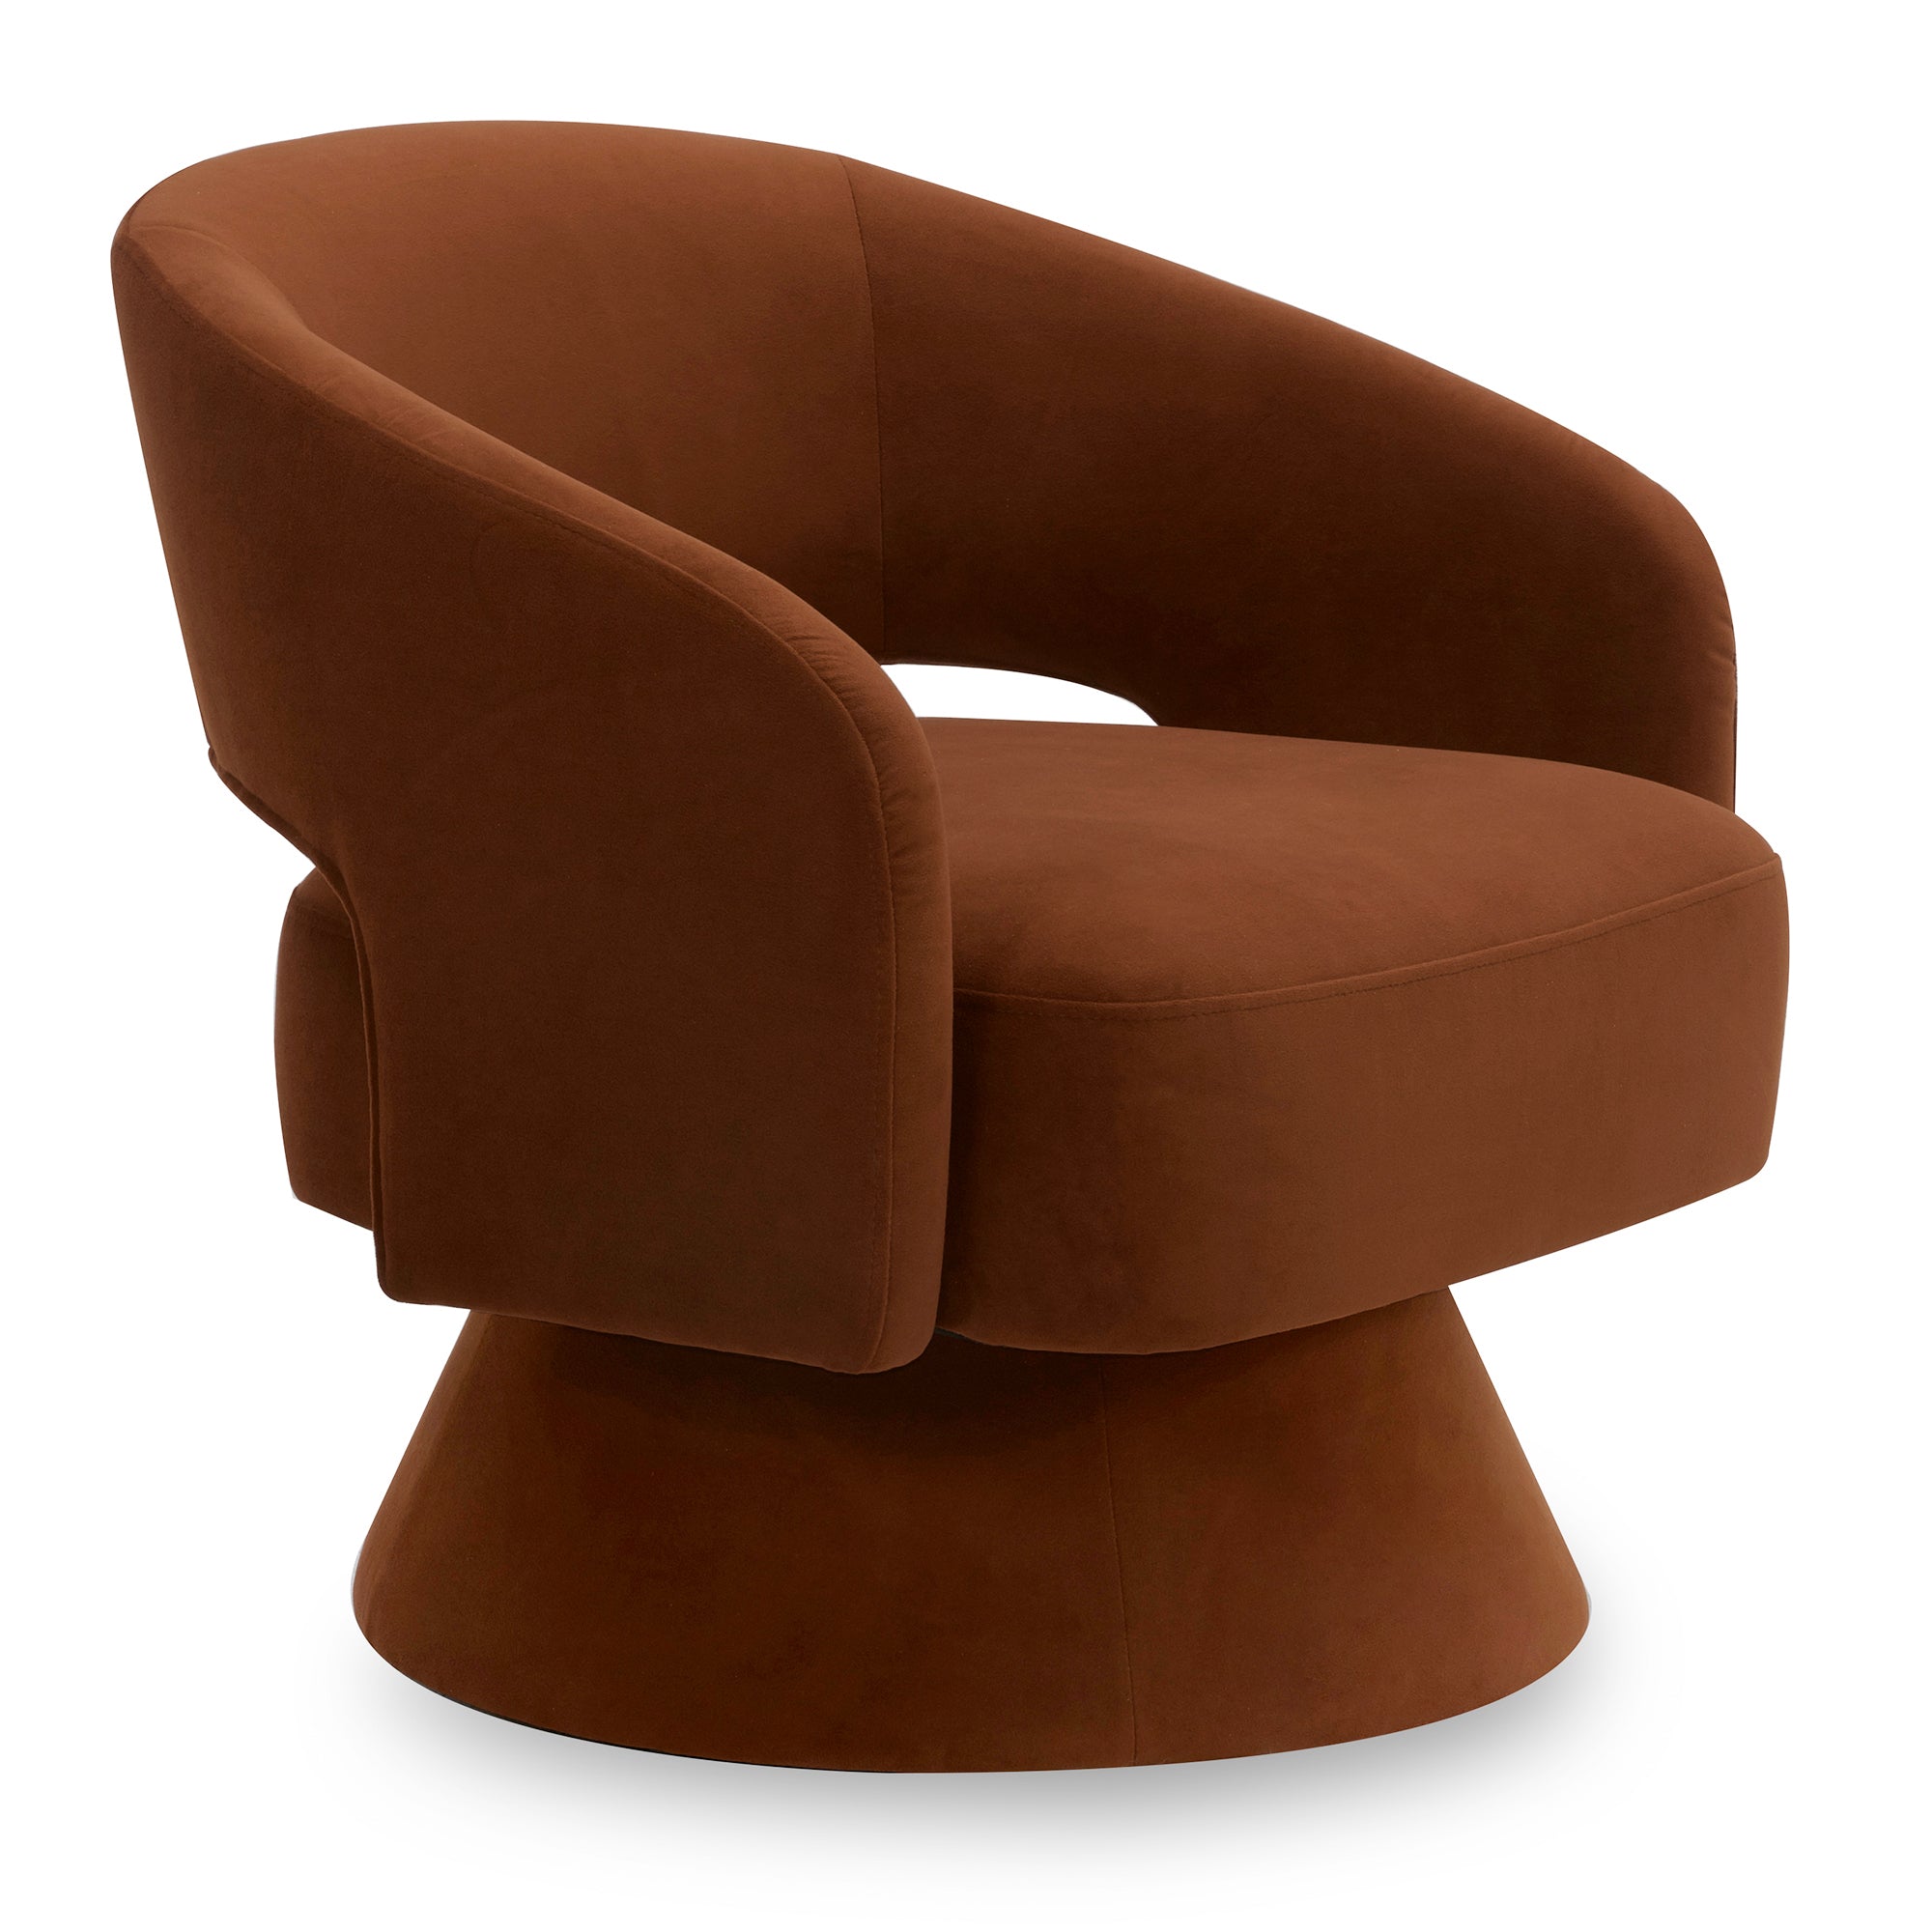 CHITA LIVING-Ambre Swivel Accent Chair-Accent Chair-Velvet-Burnt Orange-